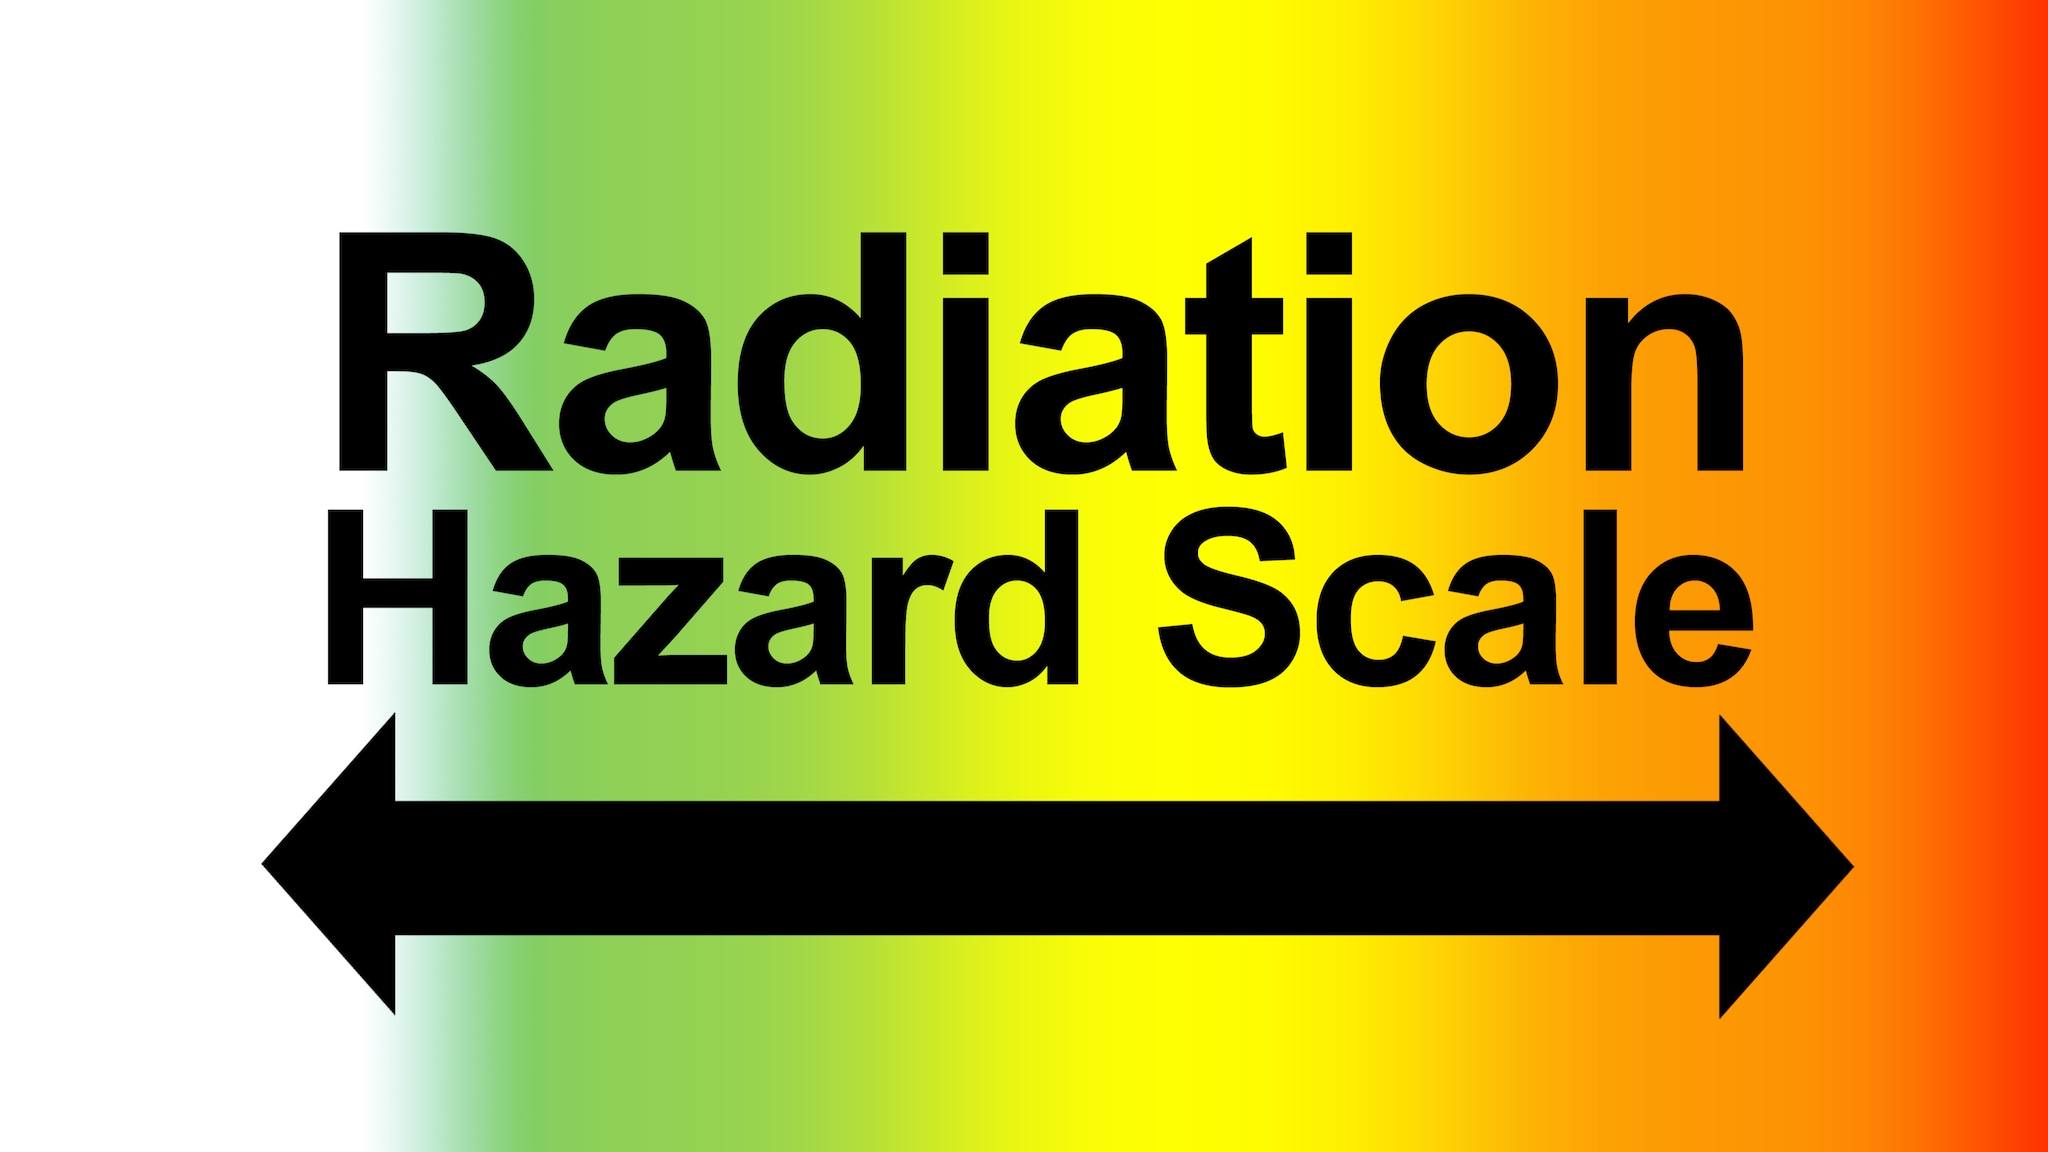 Radiation Hazard Scale logo